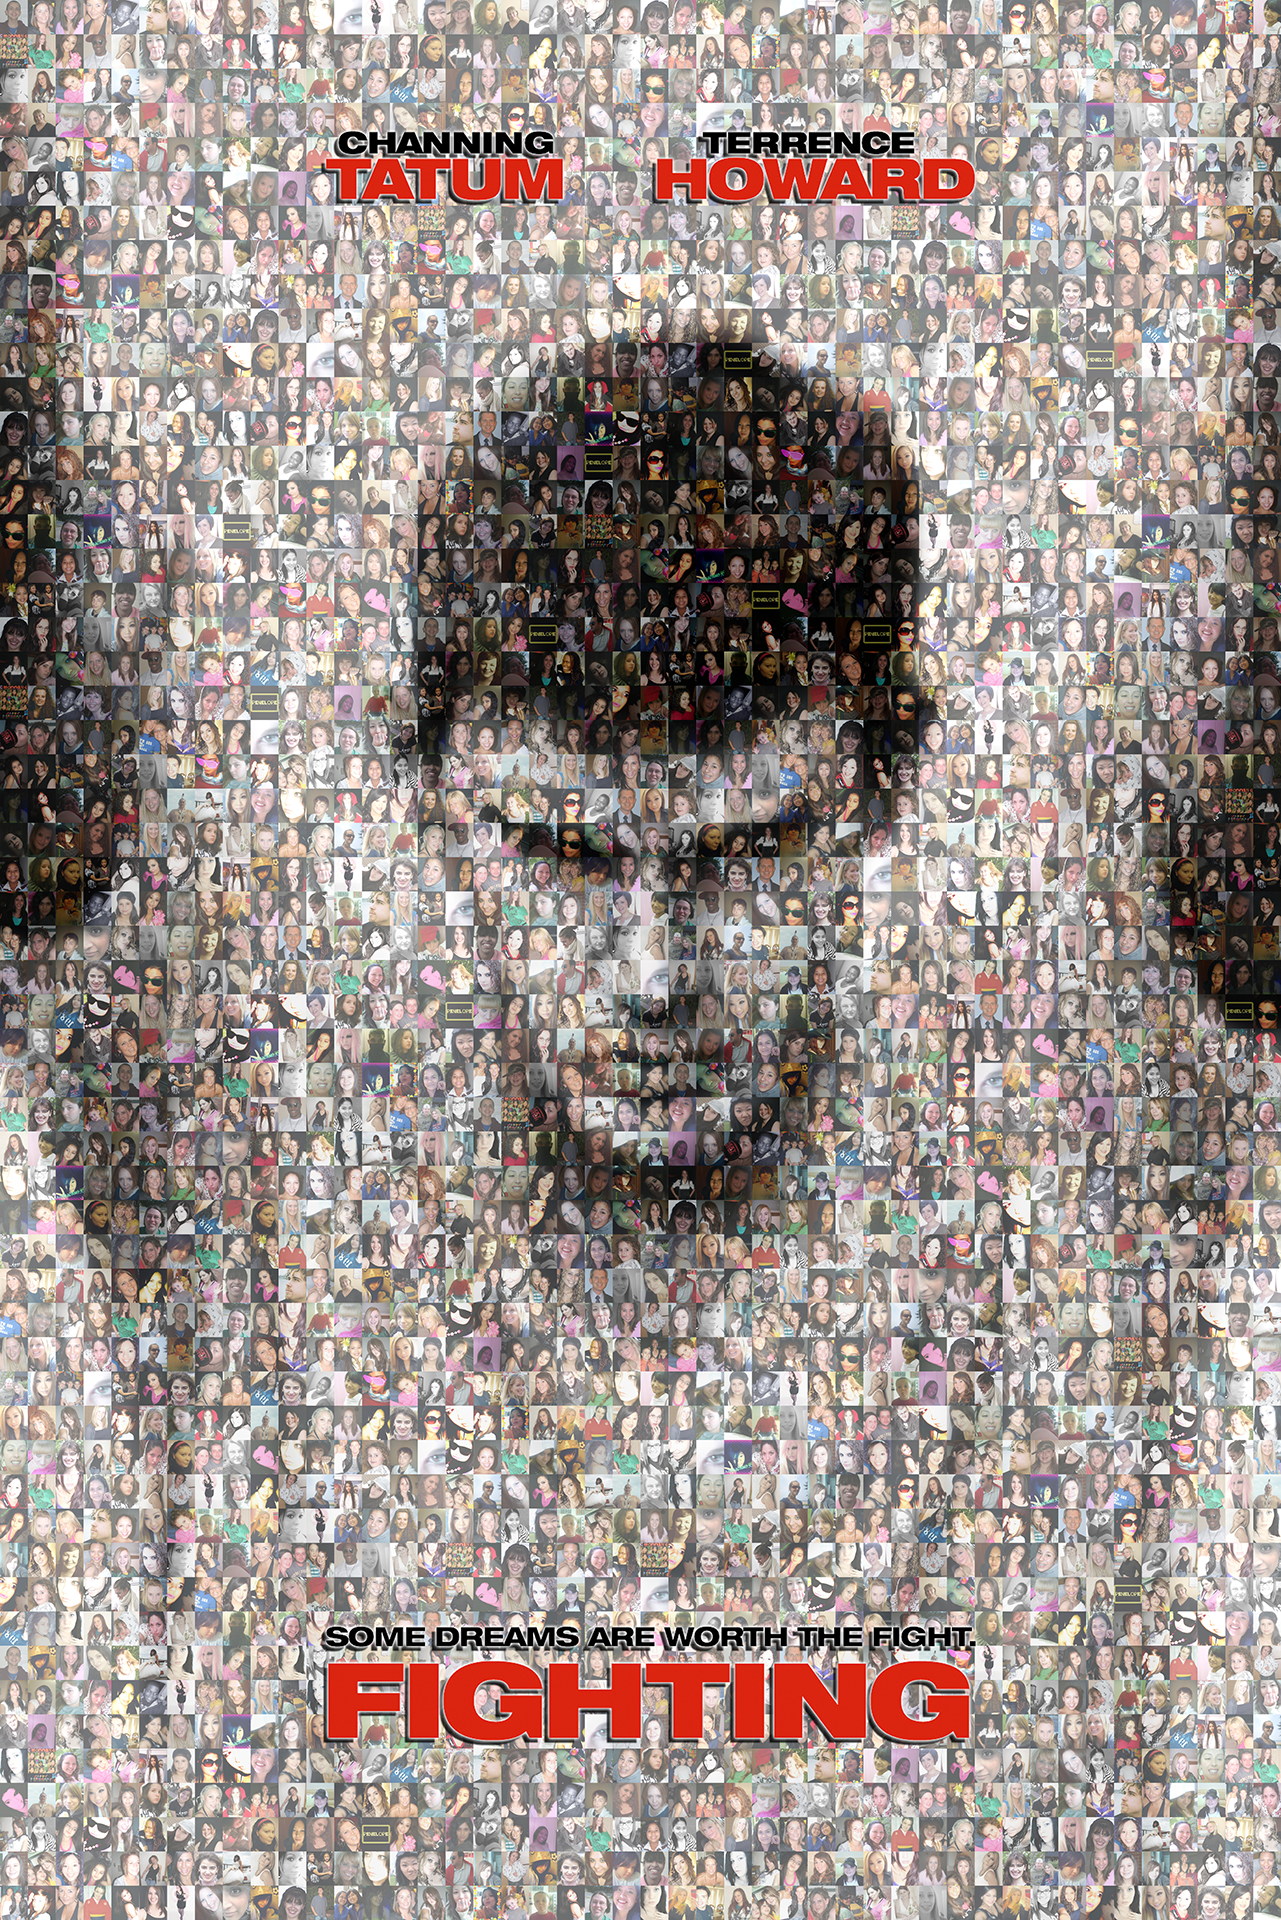 photo mosaic created using 201 fan portraits